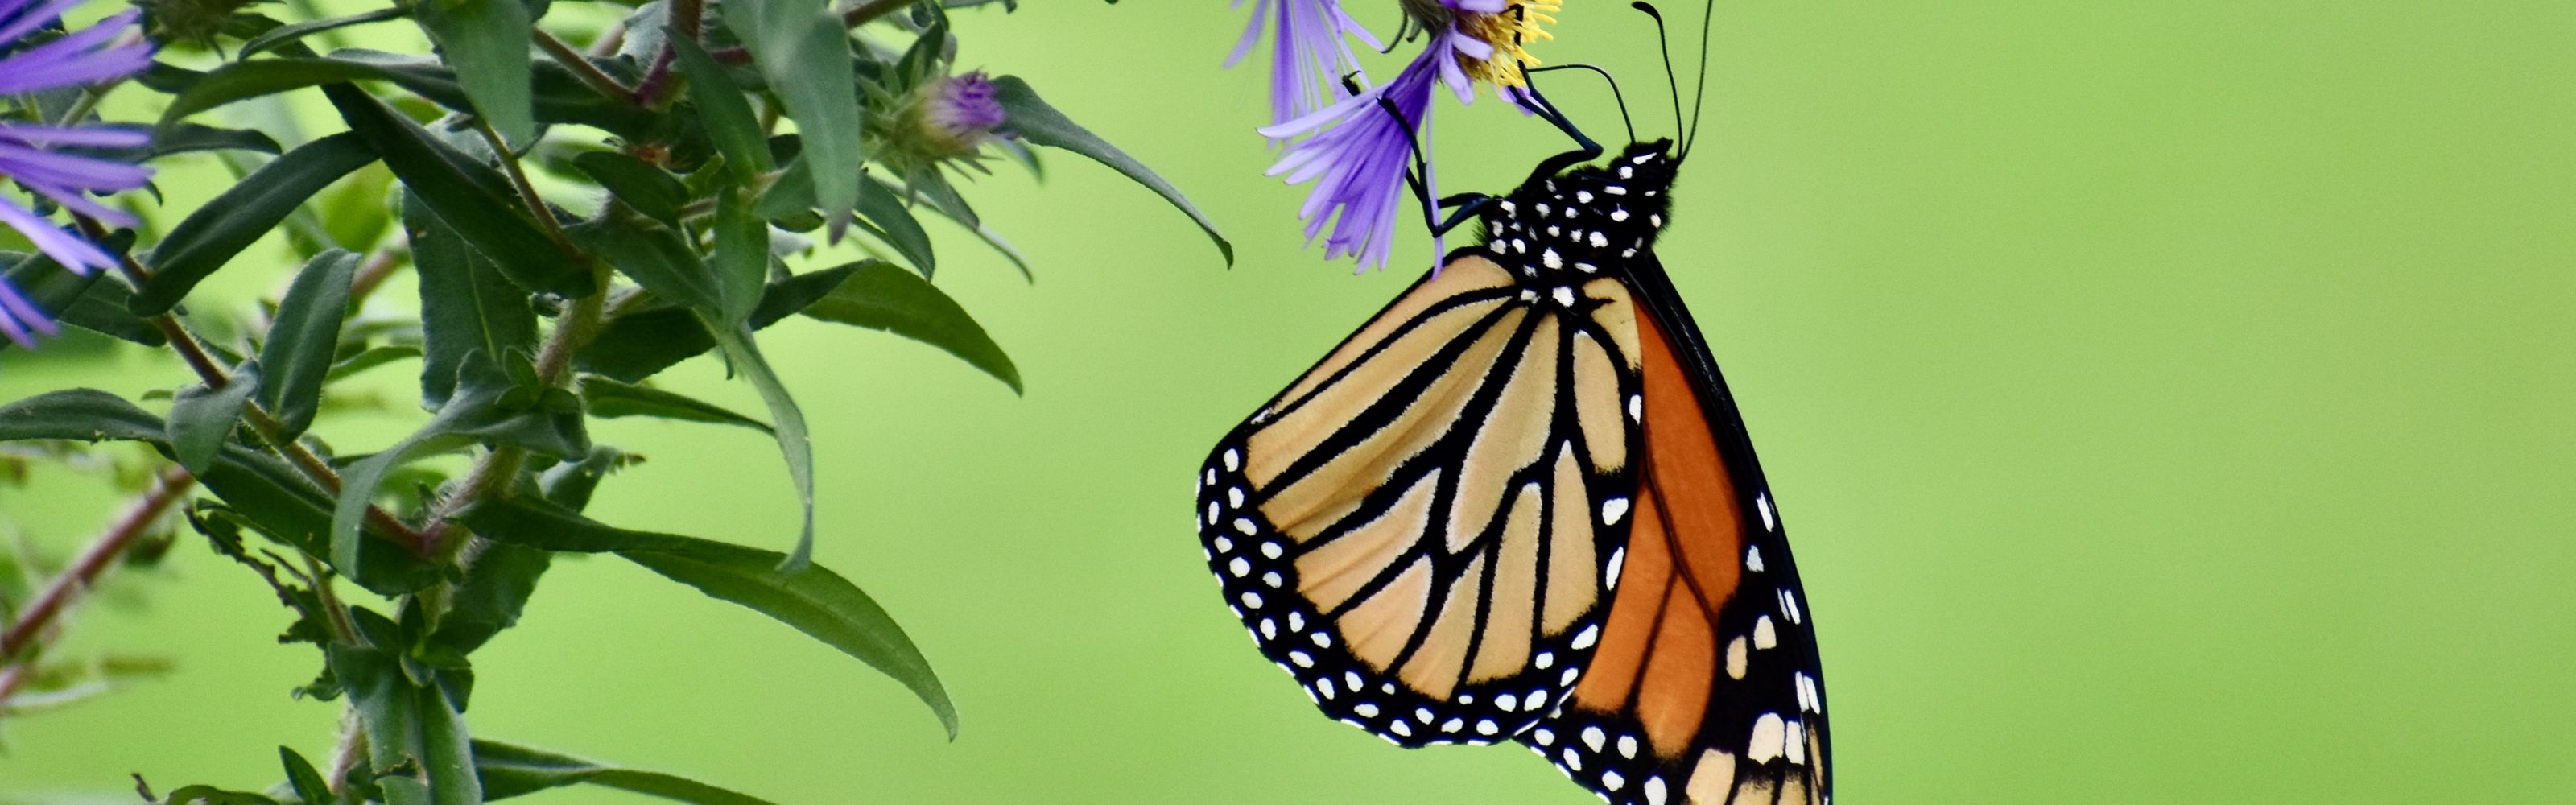 A monarch butterfly sips nectar from flowering purple plants in a pollinator garden.